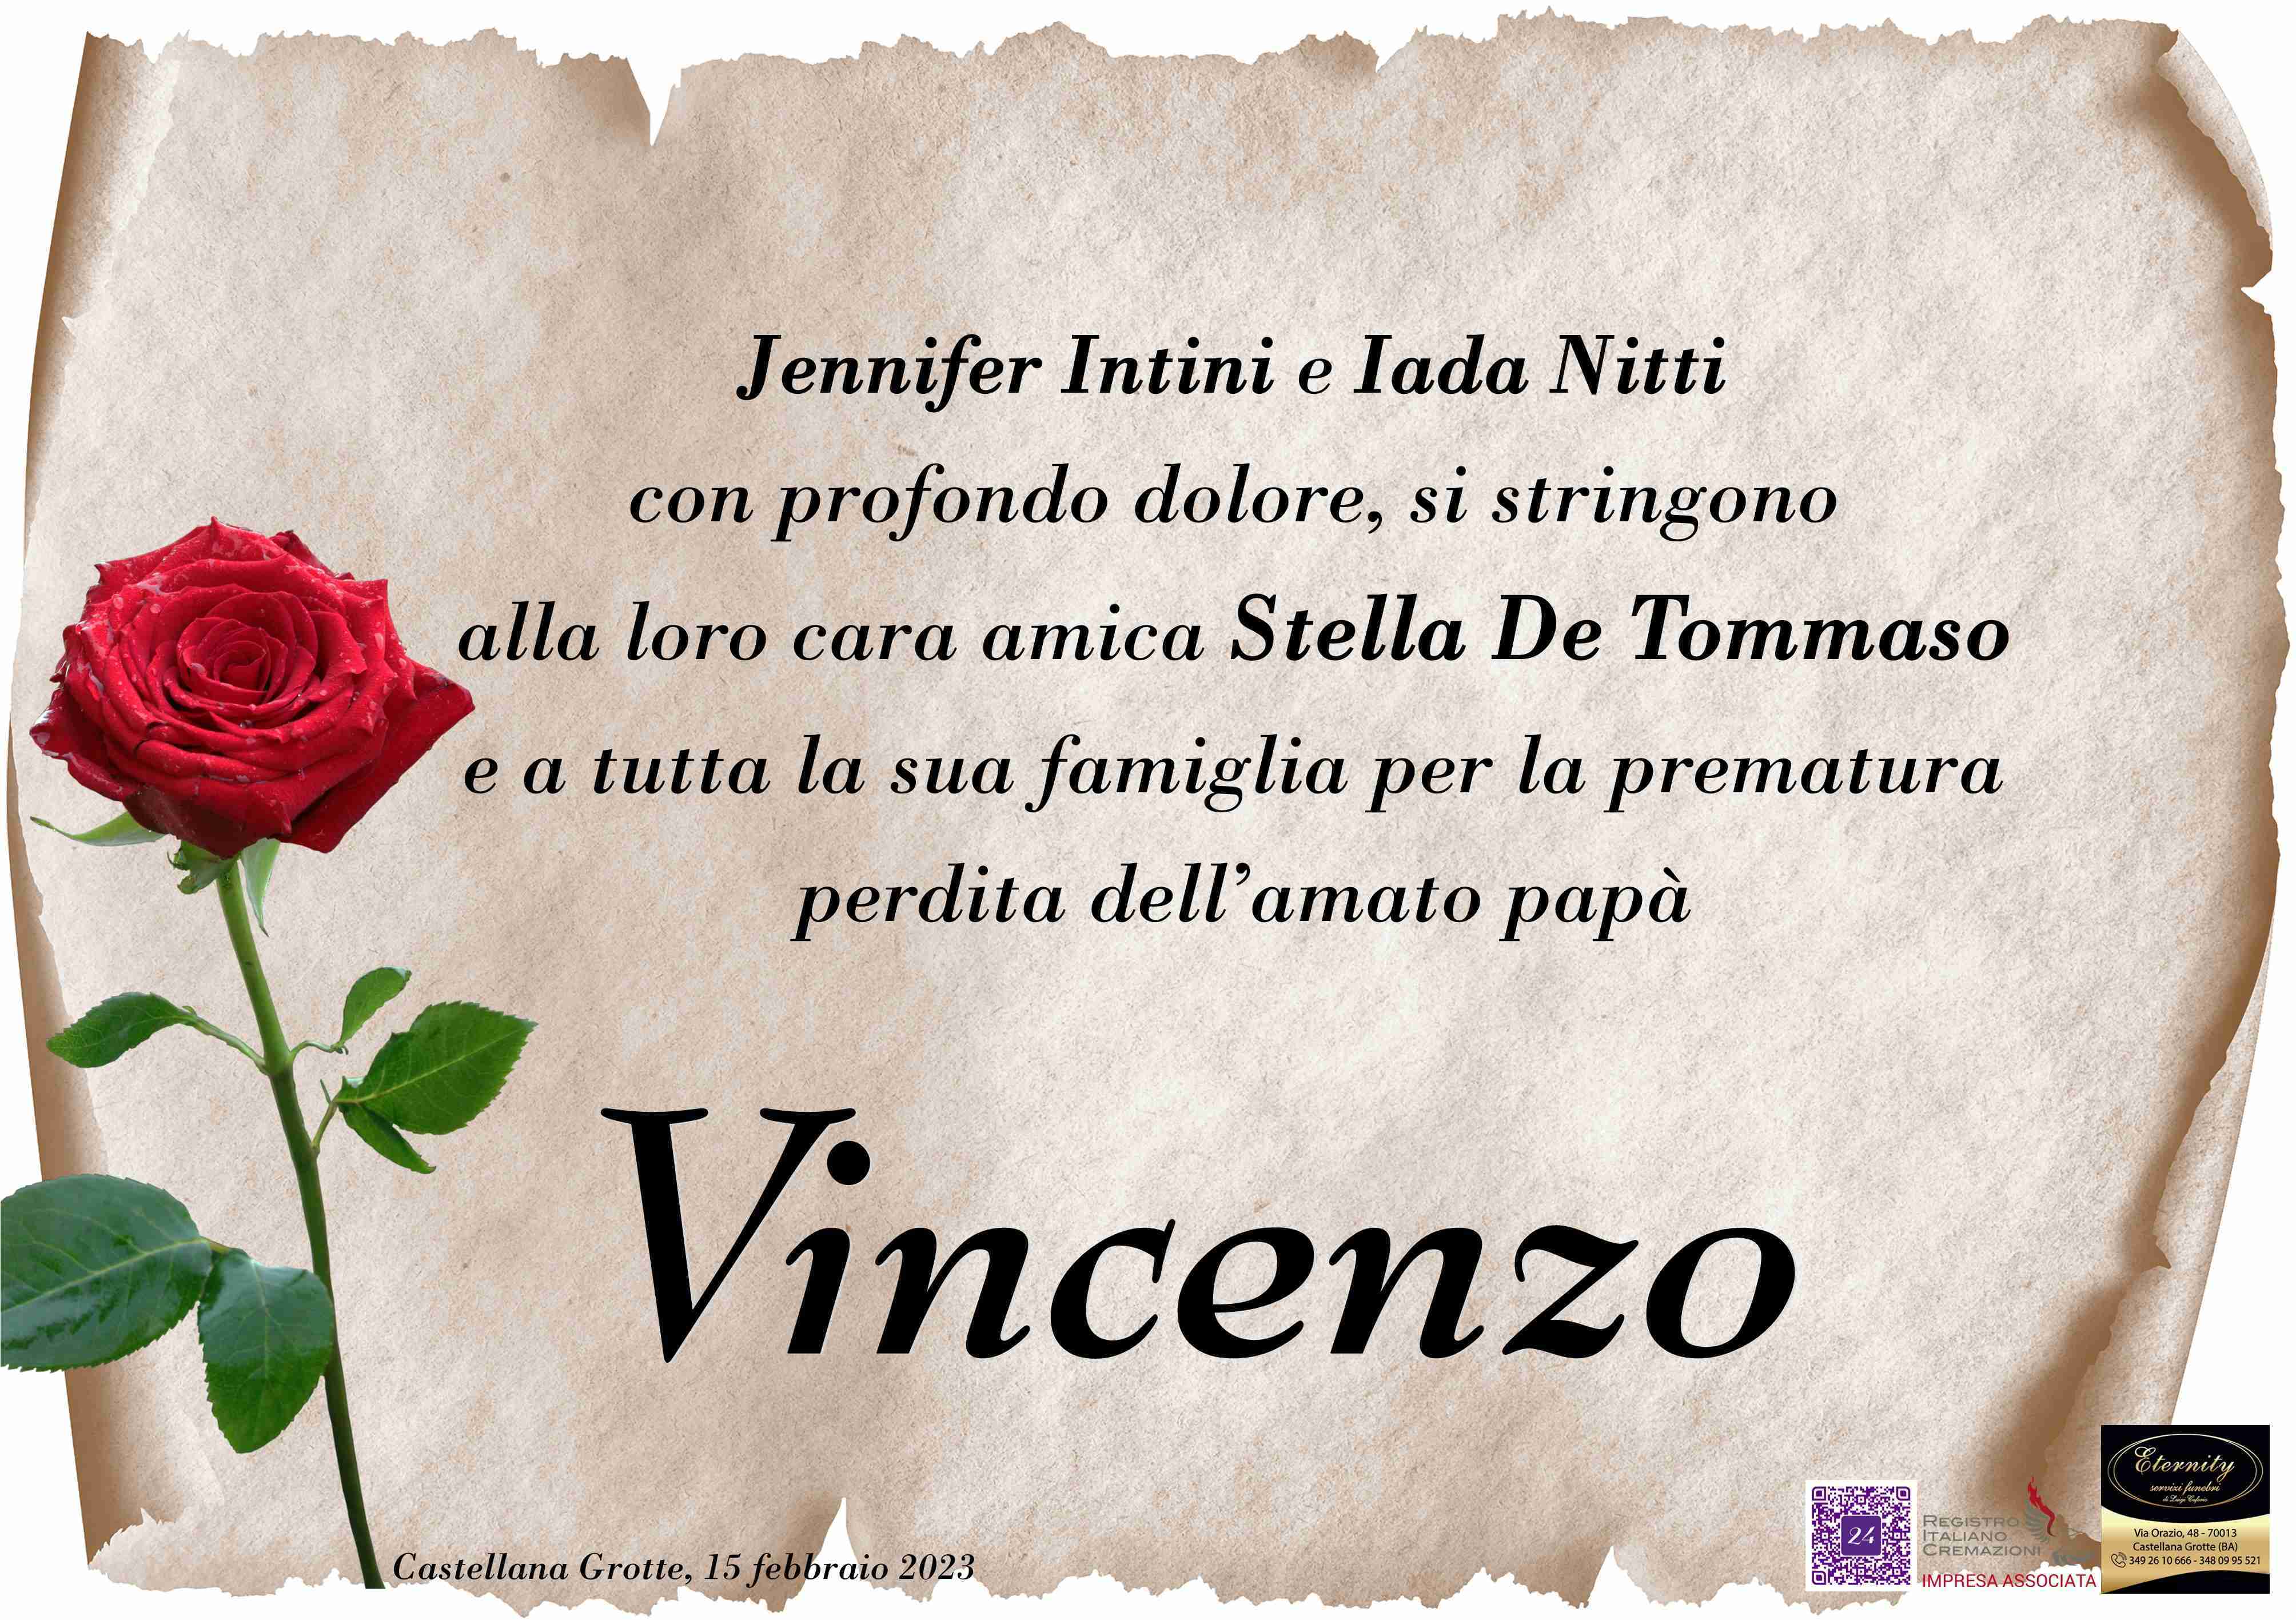 Vincenzo De Tommaso